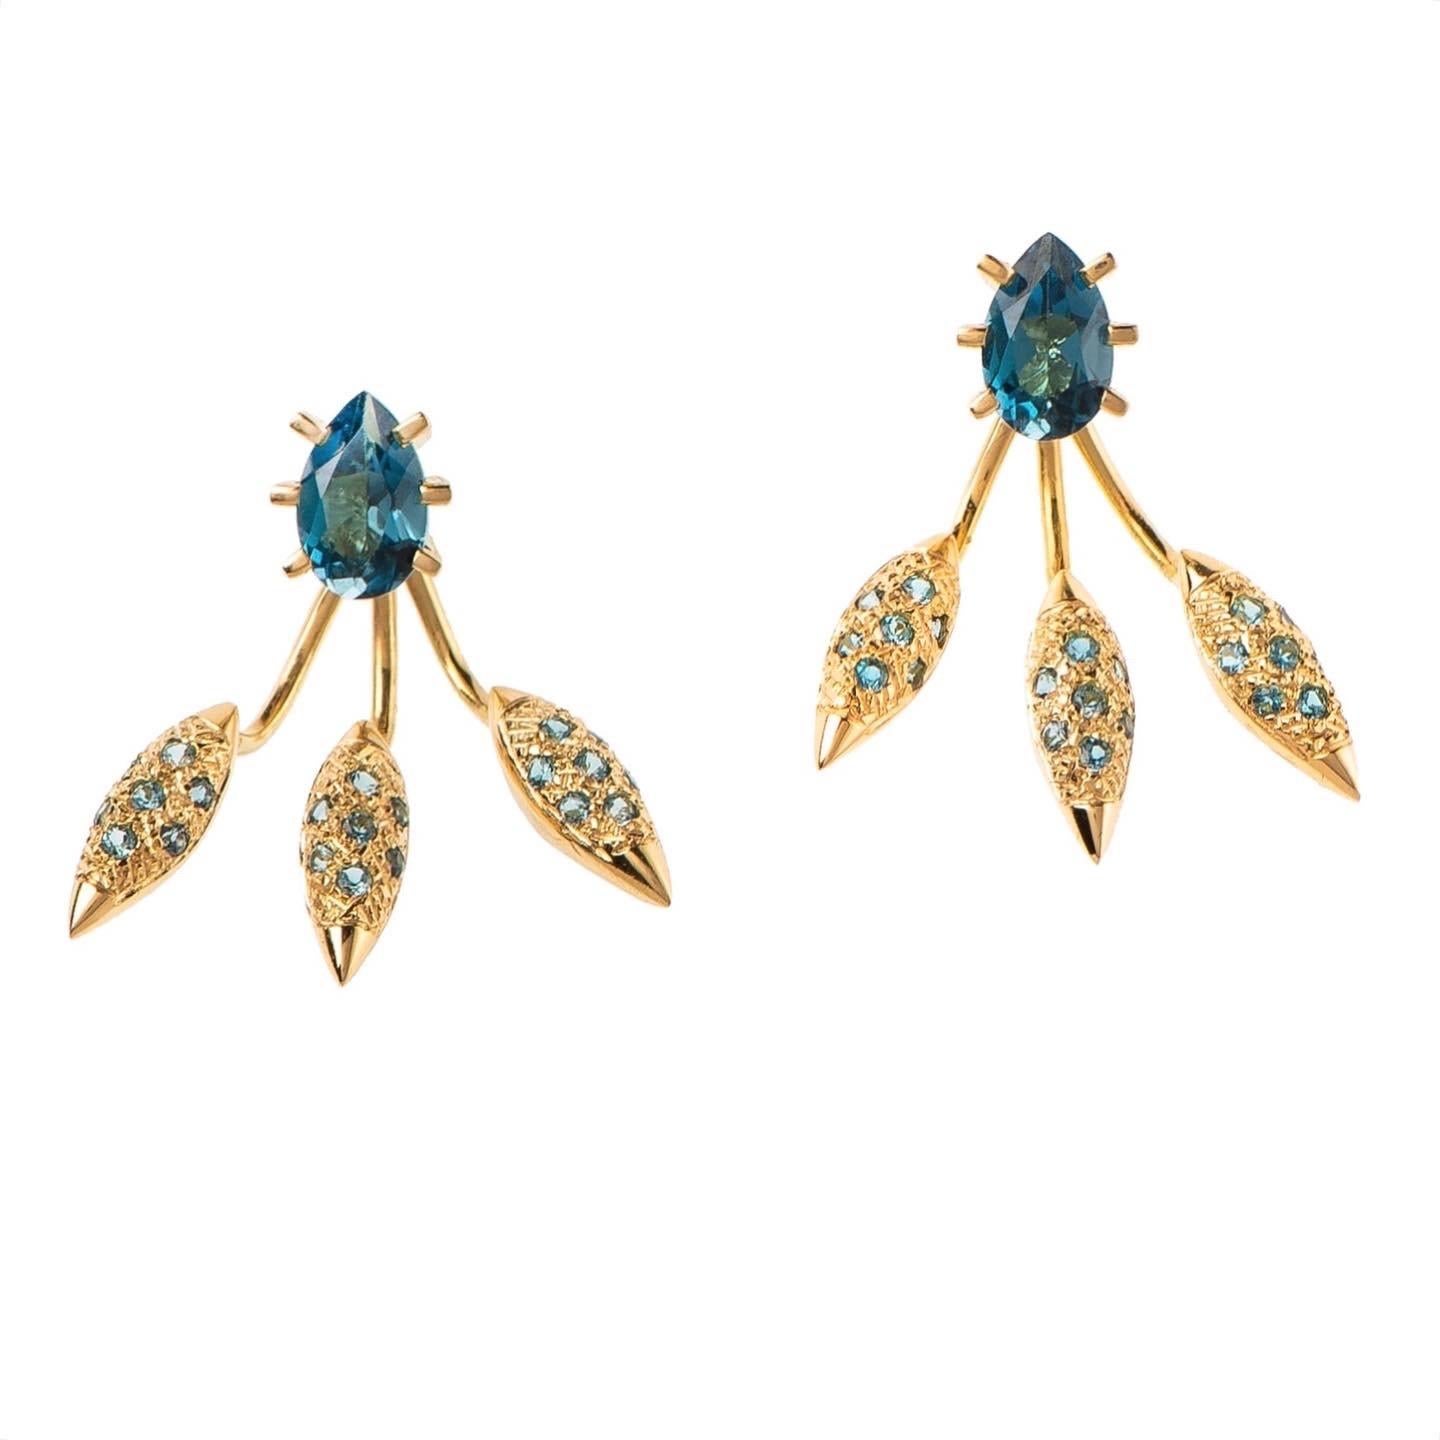 Maria Kotsoni, Contemporary 18K Gold & London Blue Topaz Ear Jackets / Studs